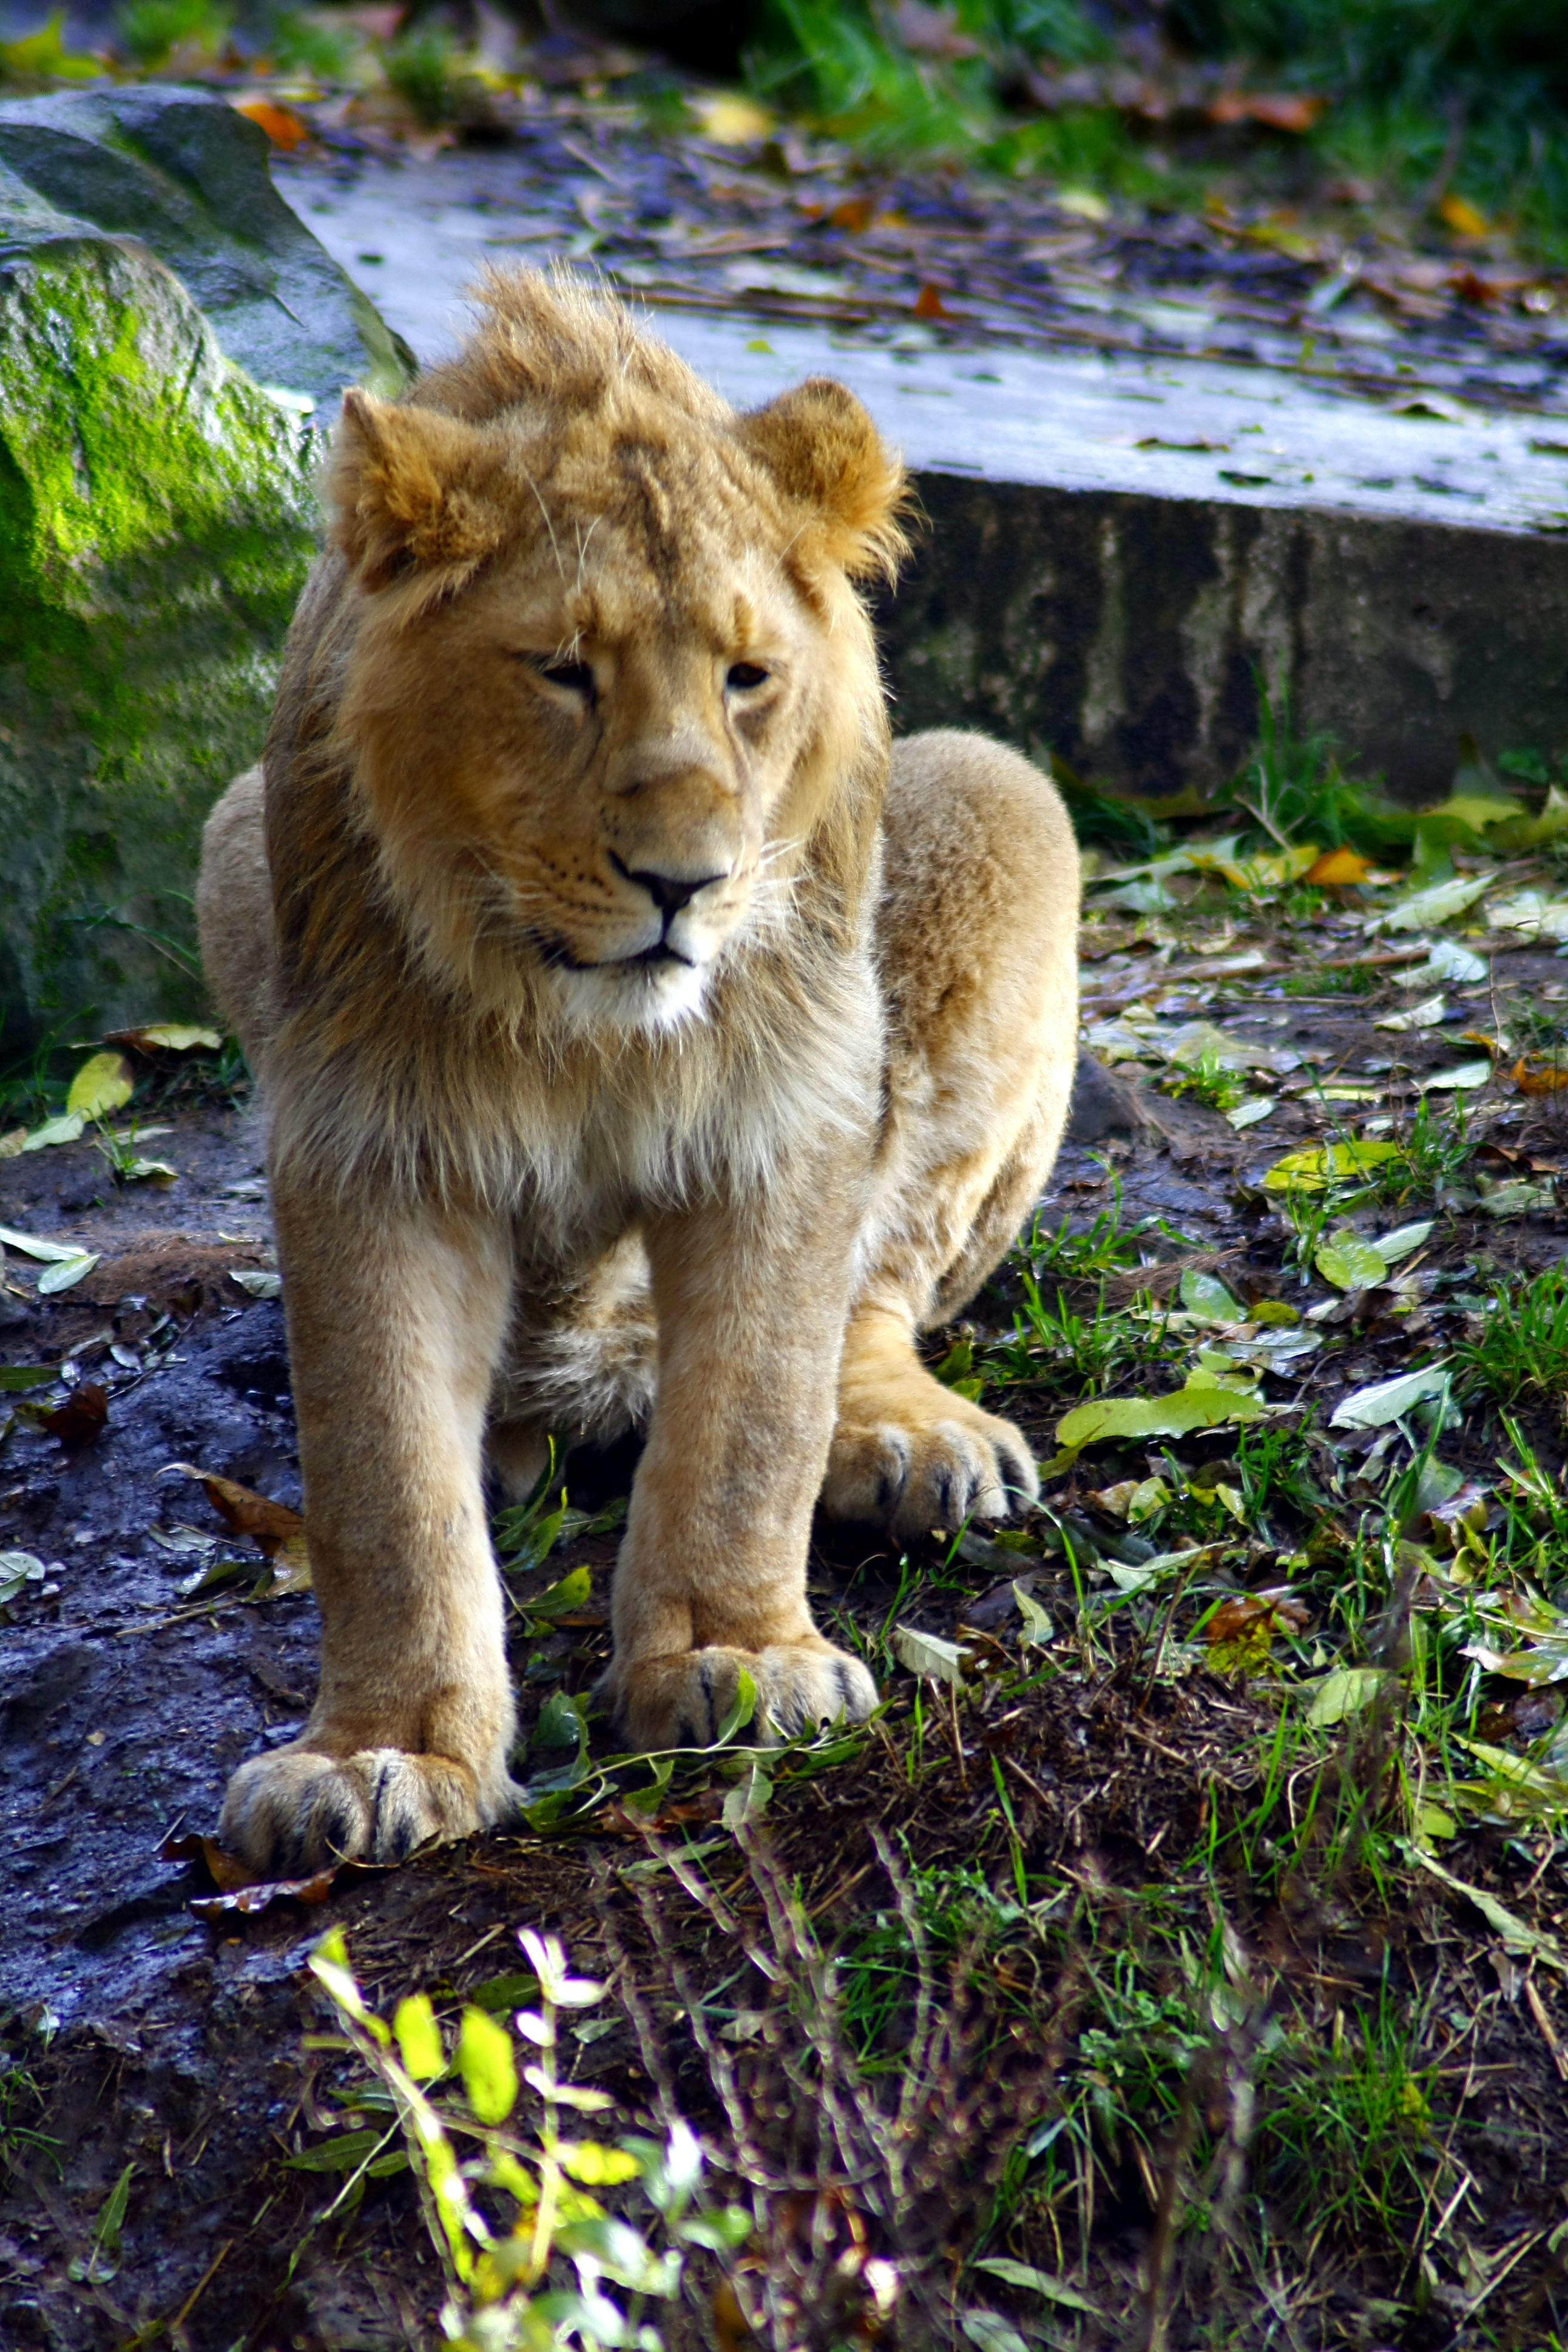 Lion photo